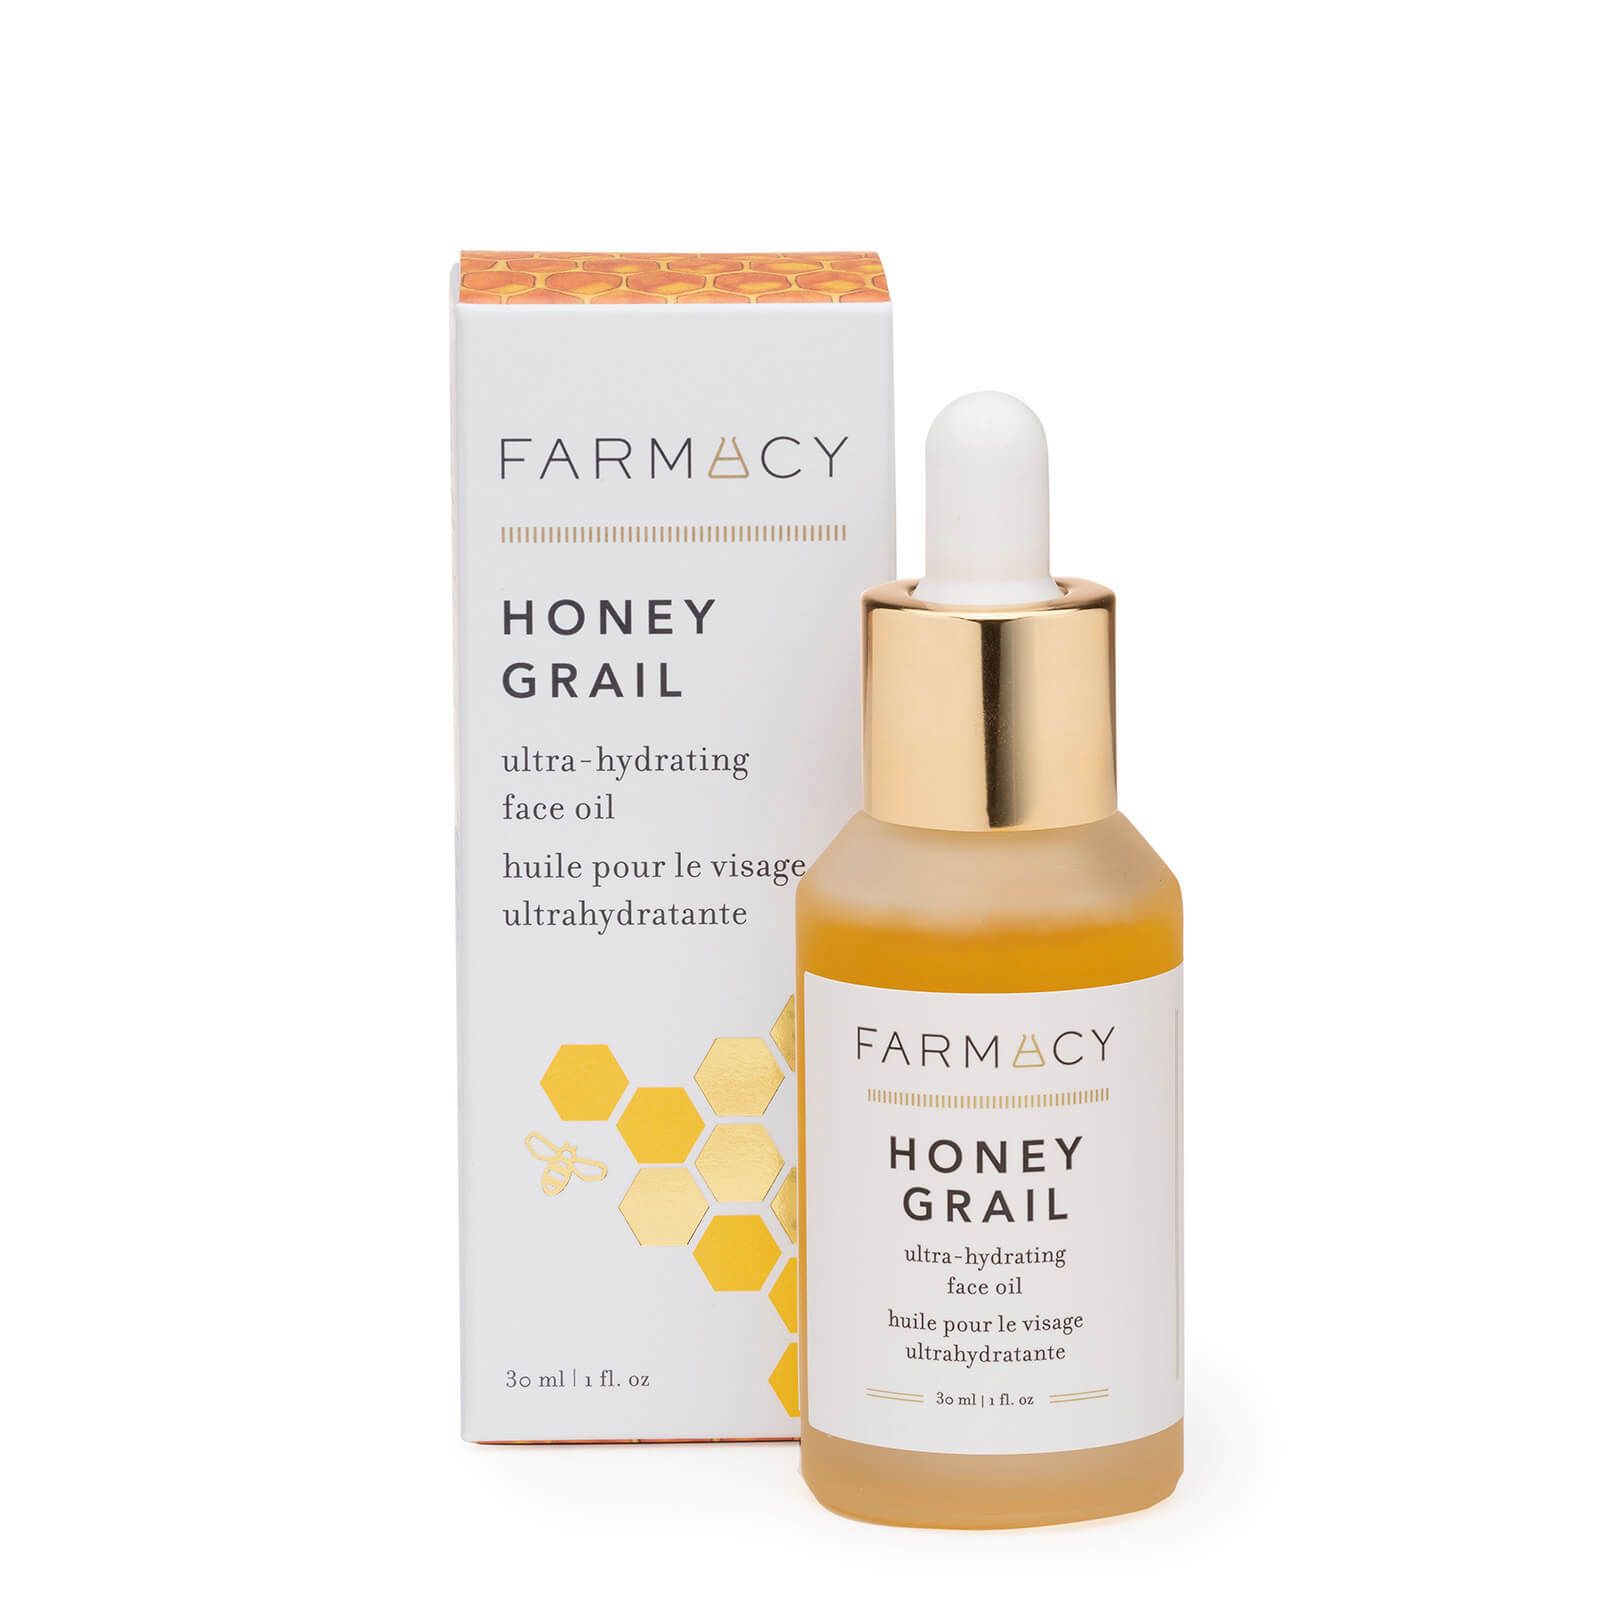 FARMACY Honey Grail Ultra-Hydrating Face Oil 30ml | Cult Beauty (Global)